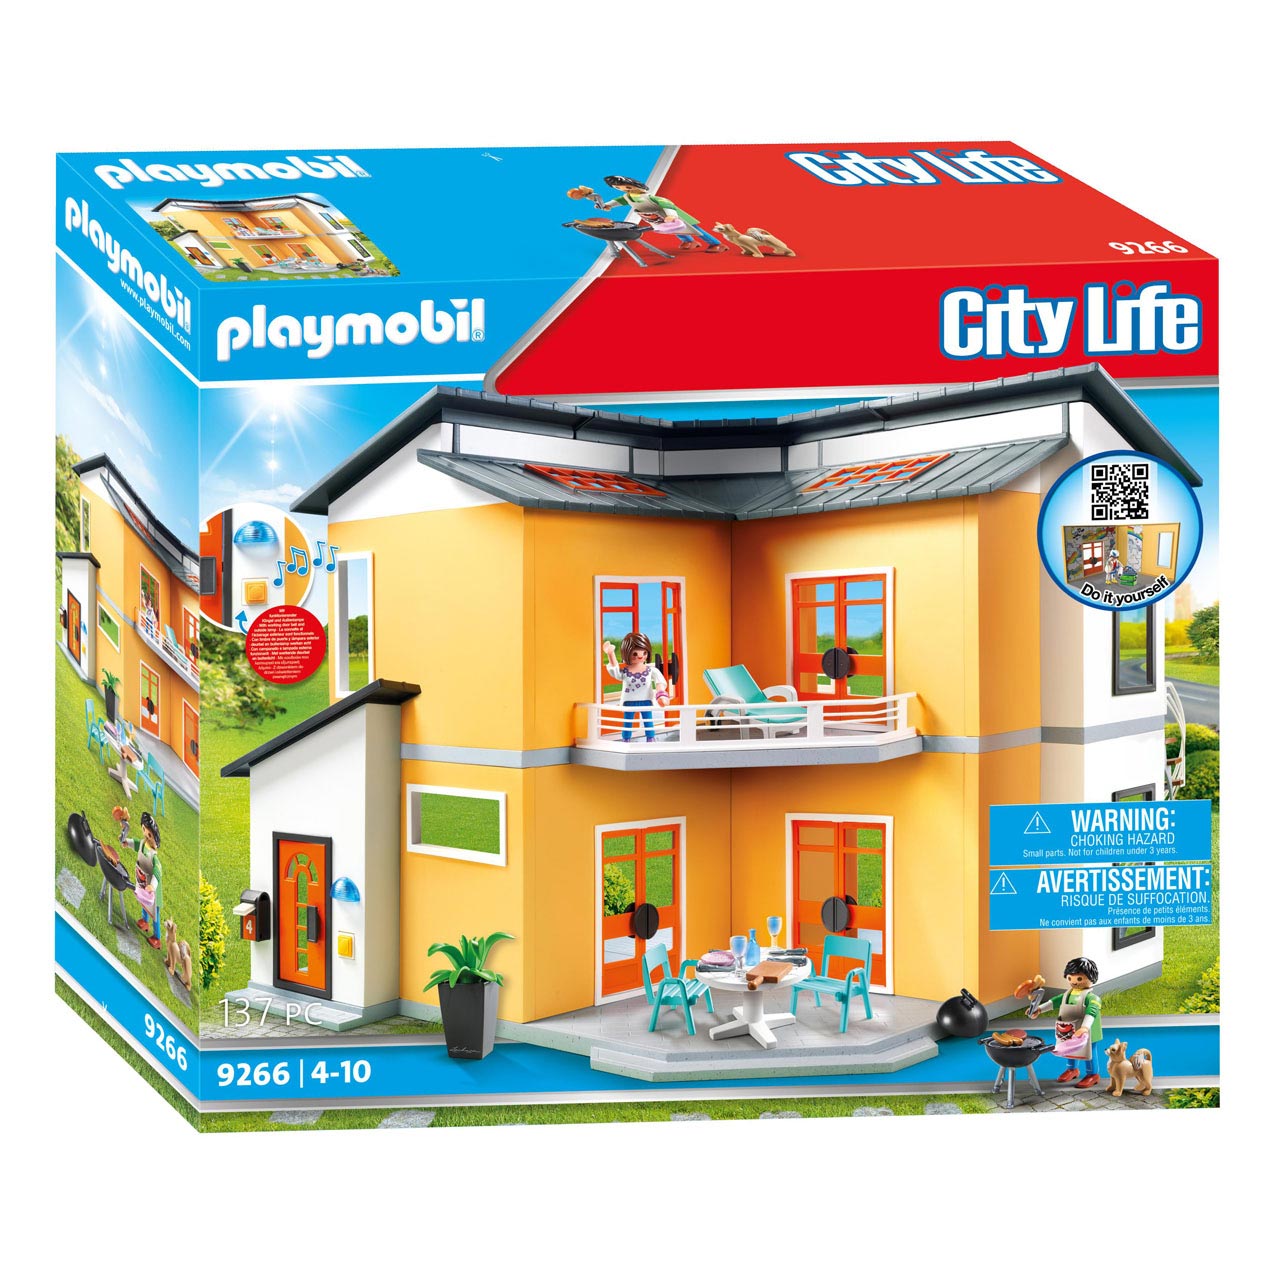 Maison playmobil - Playmobil